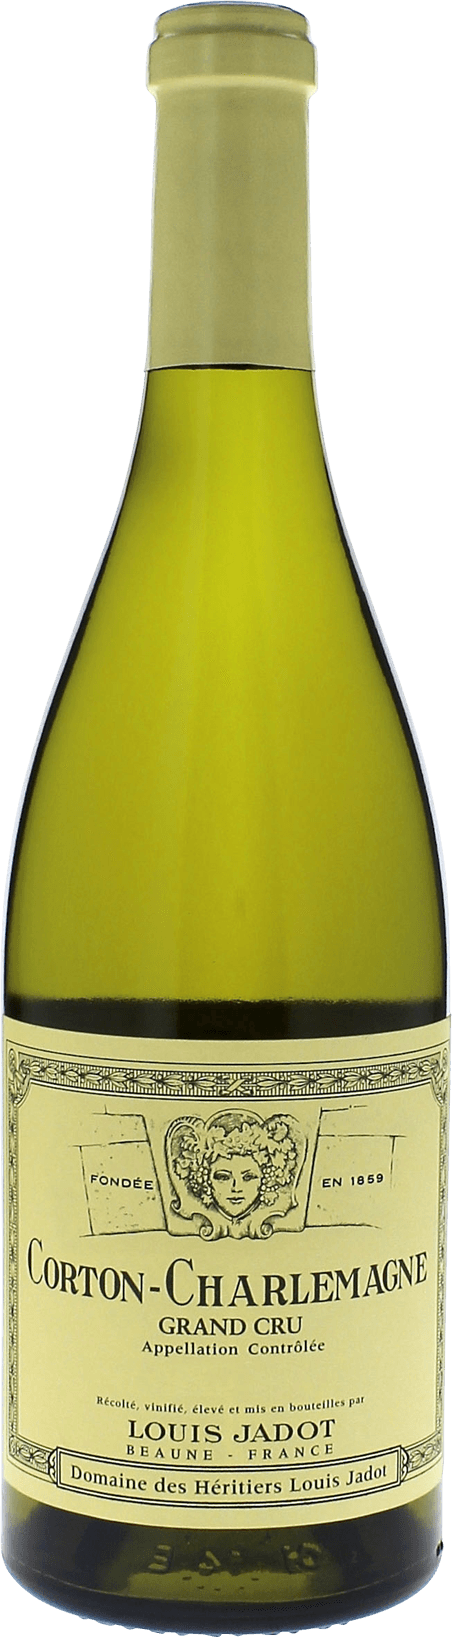 Corton charlemagne grand cru 2015  Jadot Louis, Bourgogne blanc